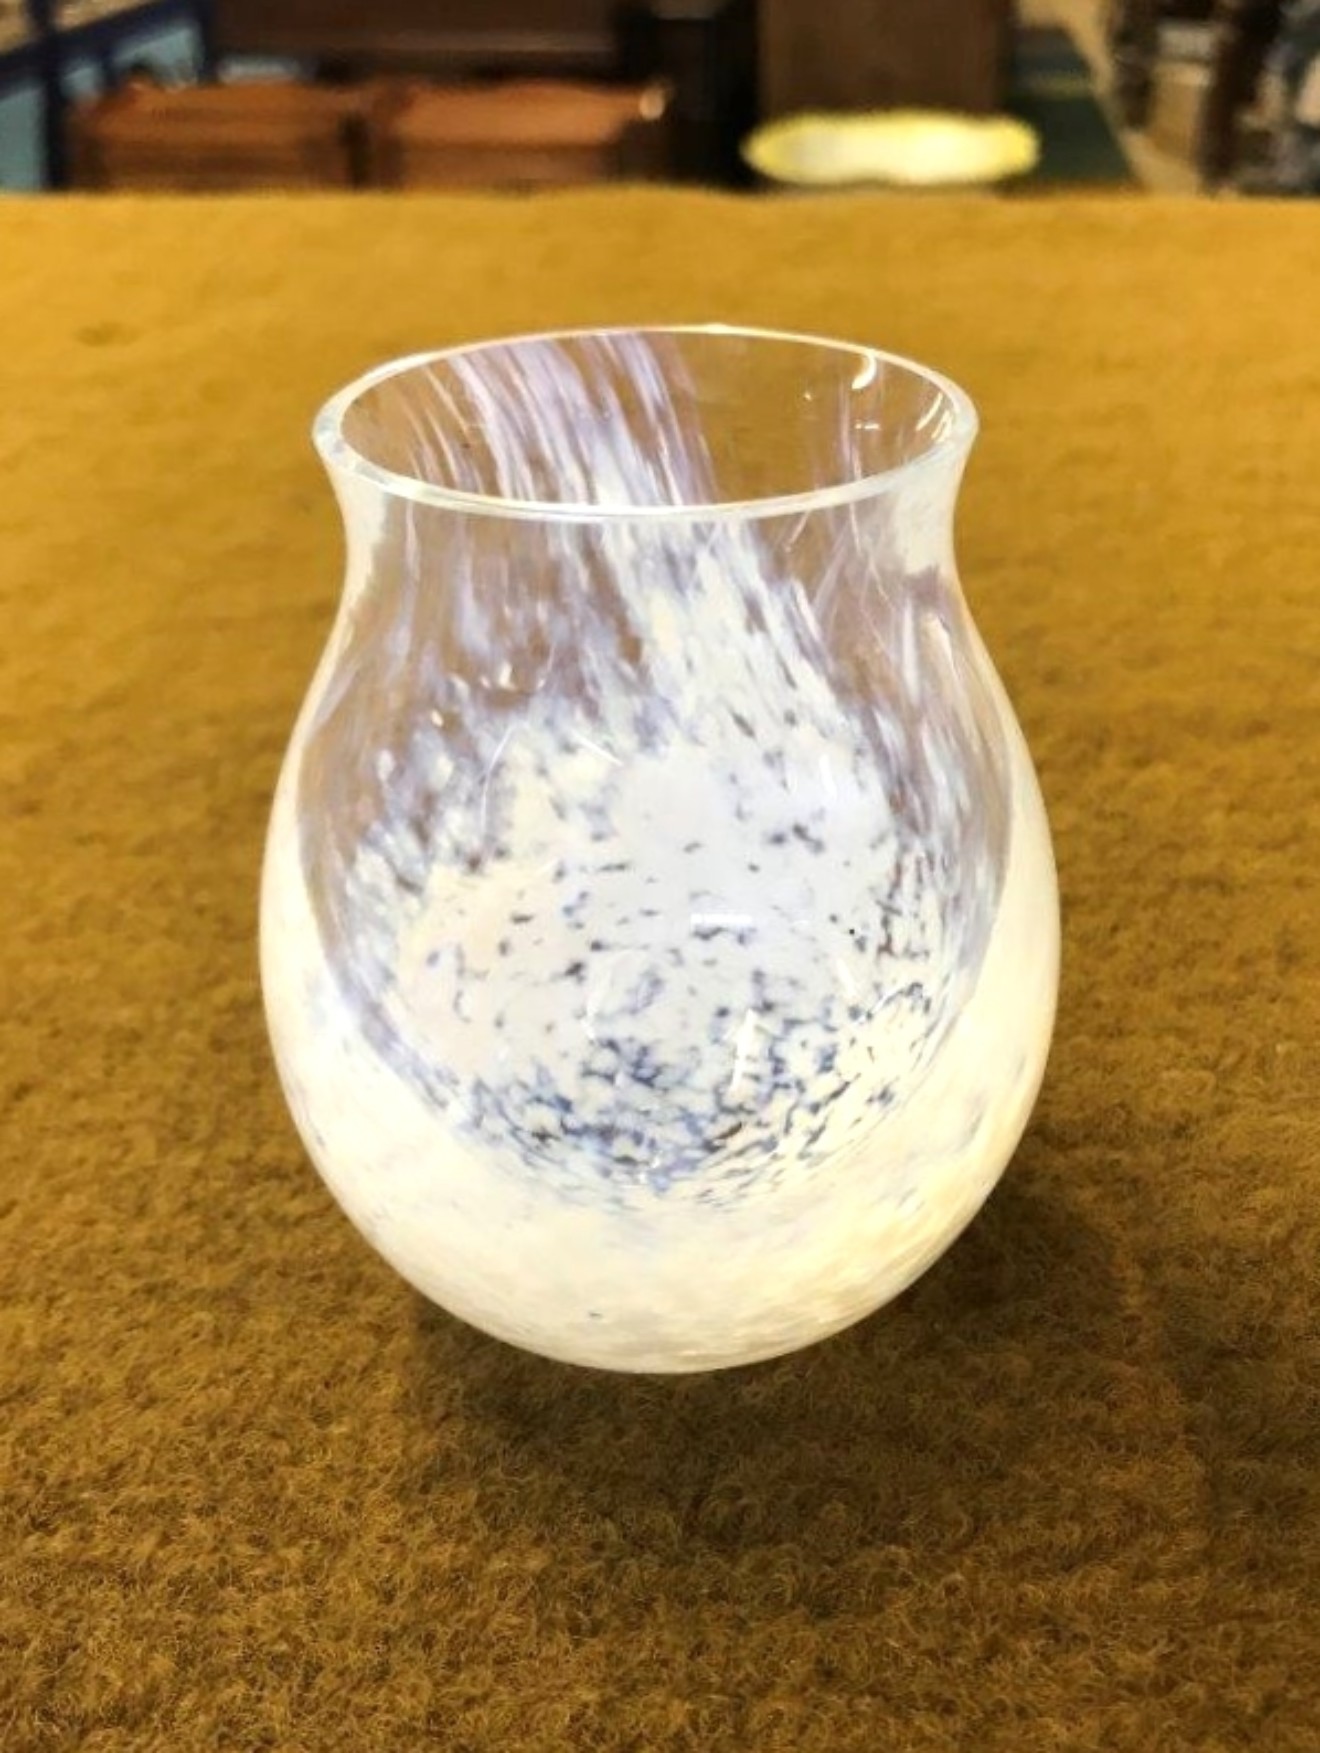 Vintage Caithness Mottled Glass Bud Vase